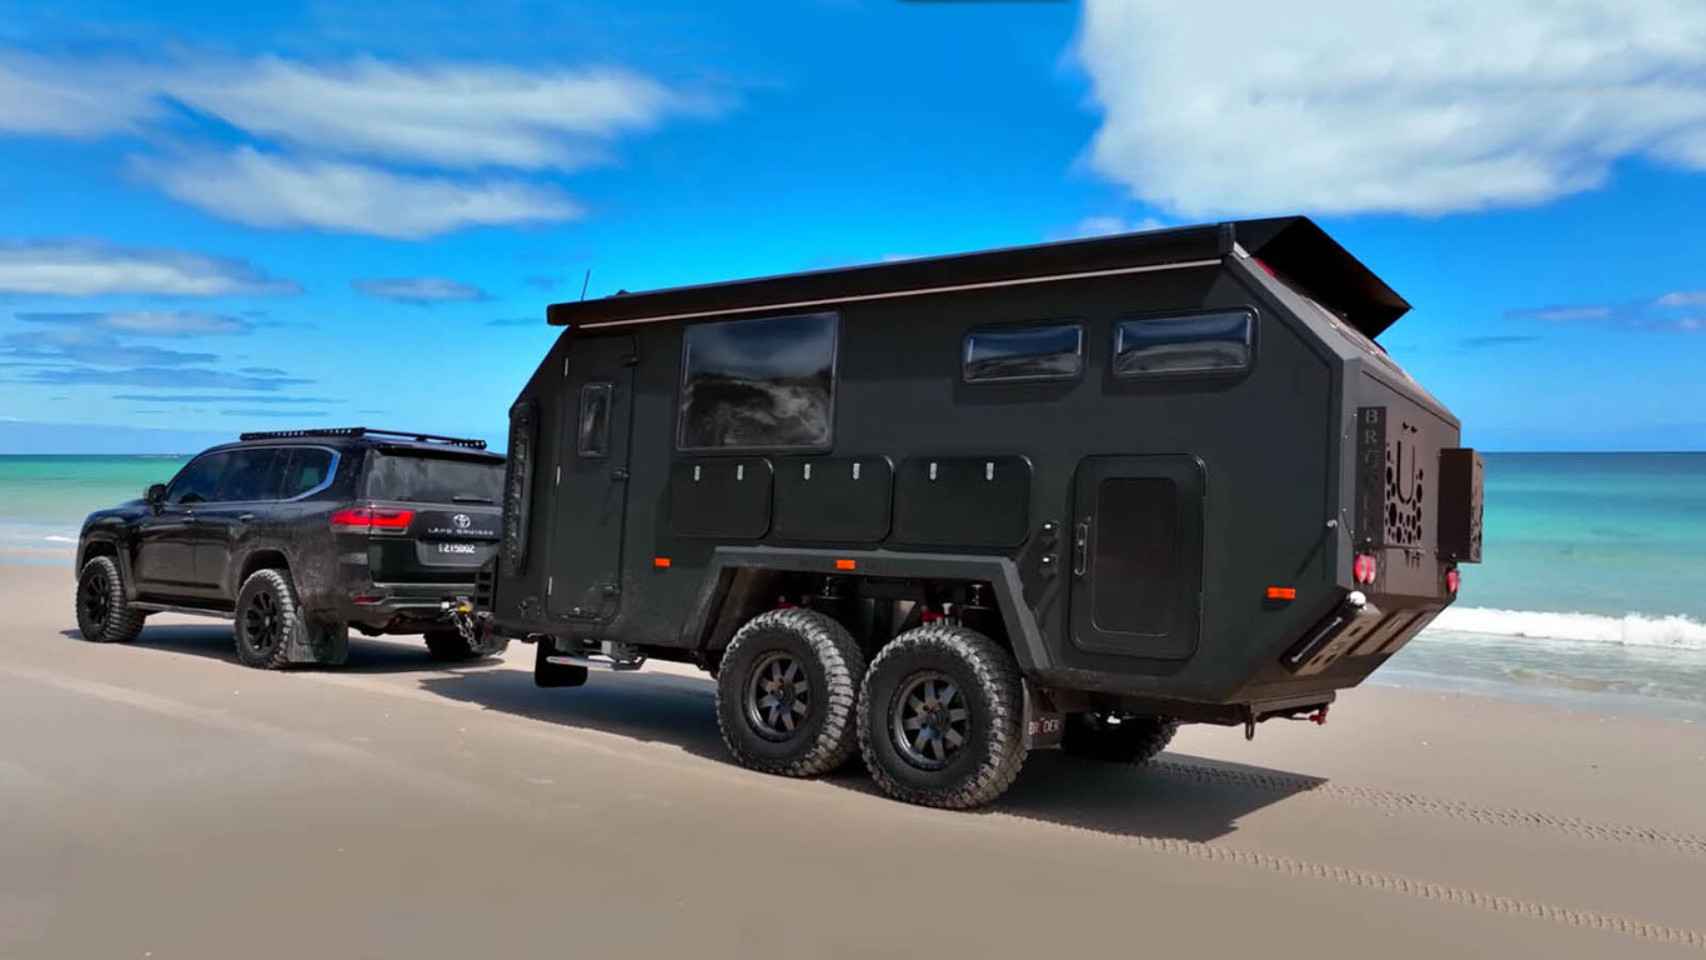 La caravana EXP-8.